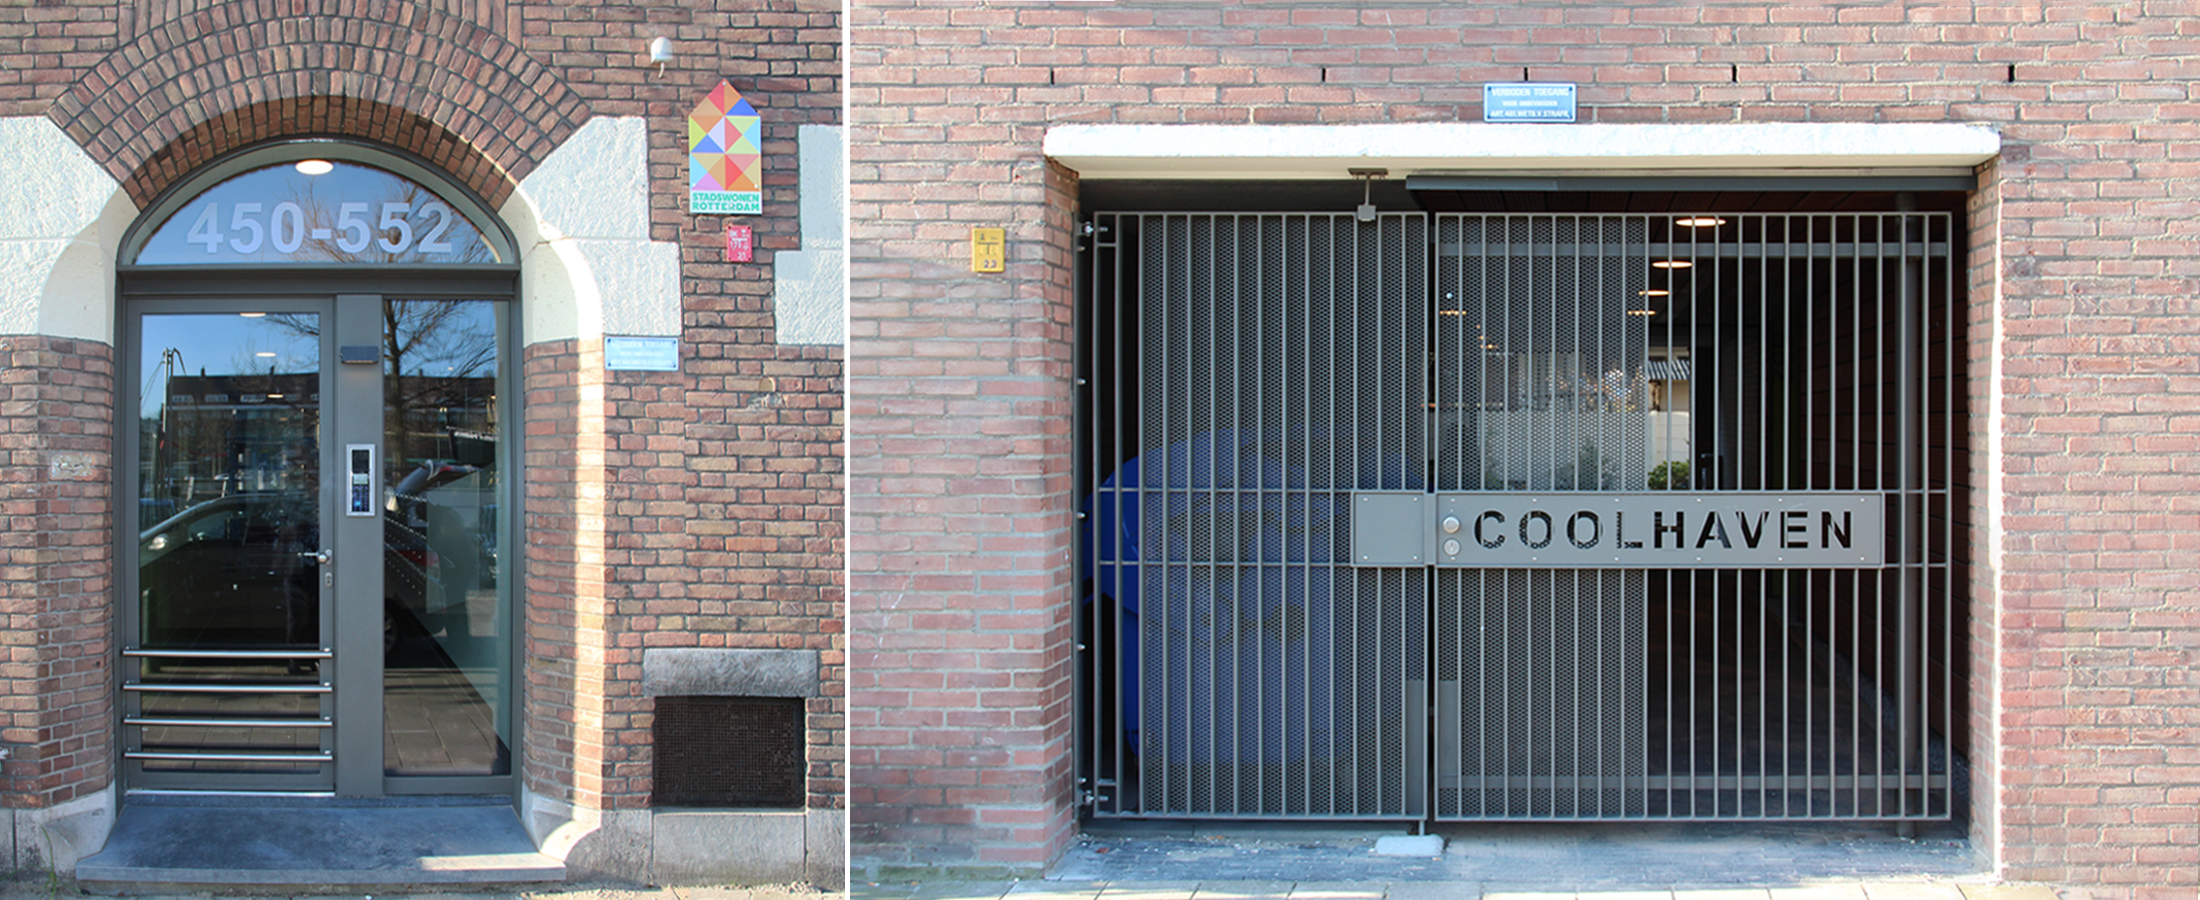 Coolhavengebouw, Rotterdam